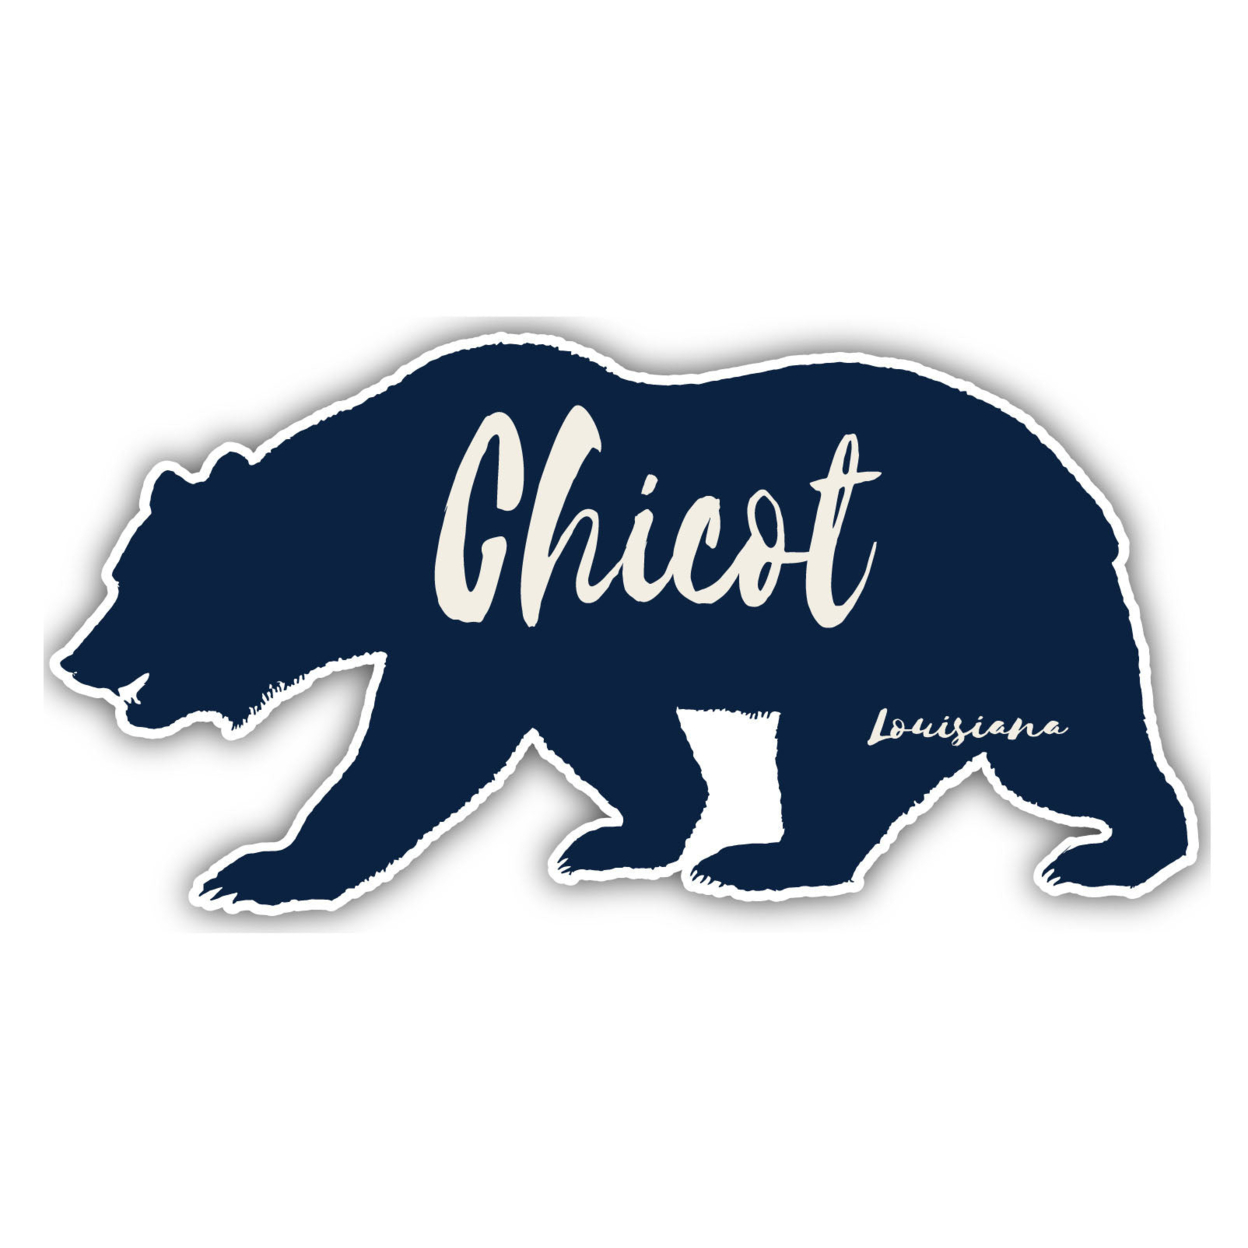 Chicot Louisiana Souvenir Decorative Stickers (Choose Theme And Size) - Single Unit, 12-Inch, Bear